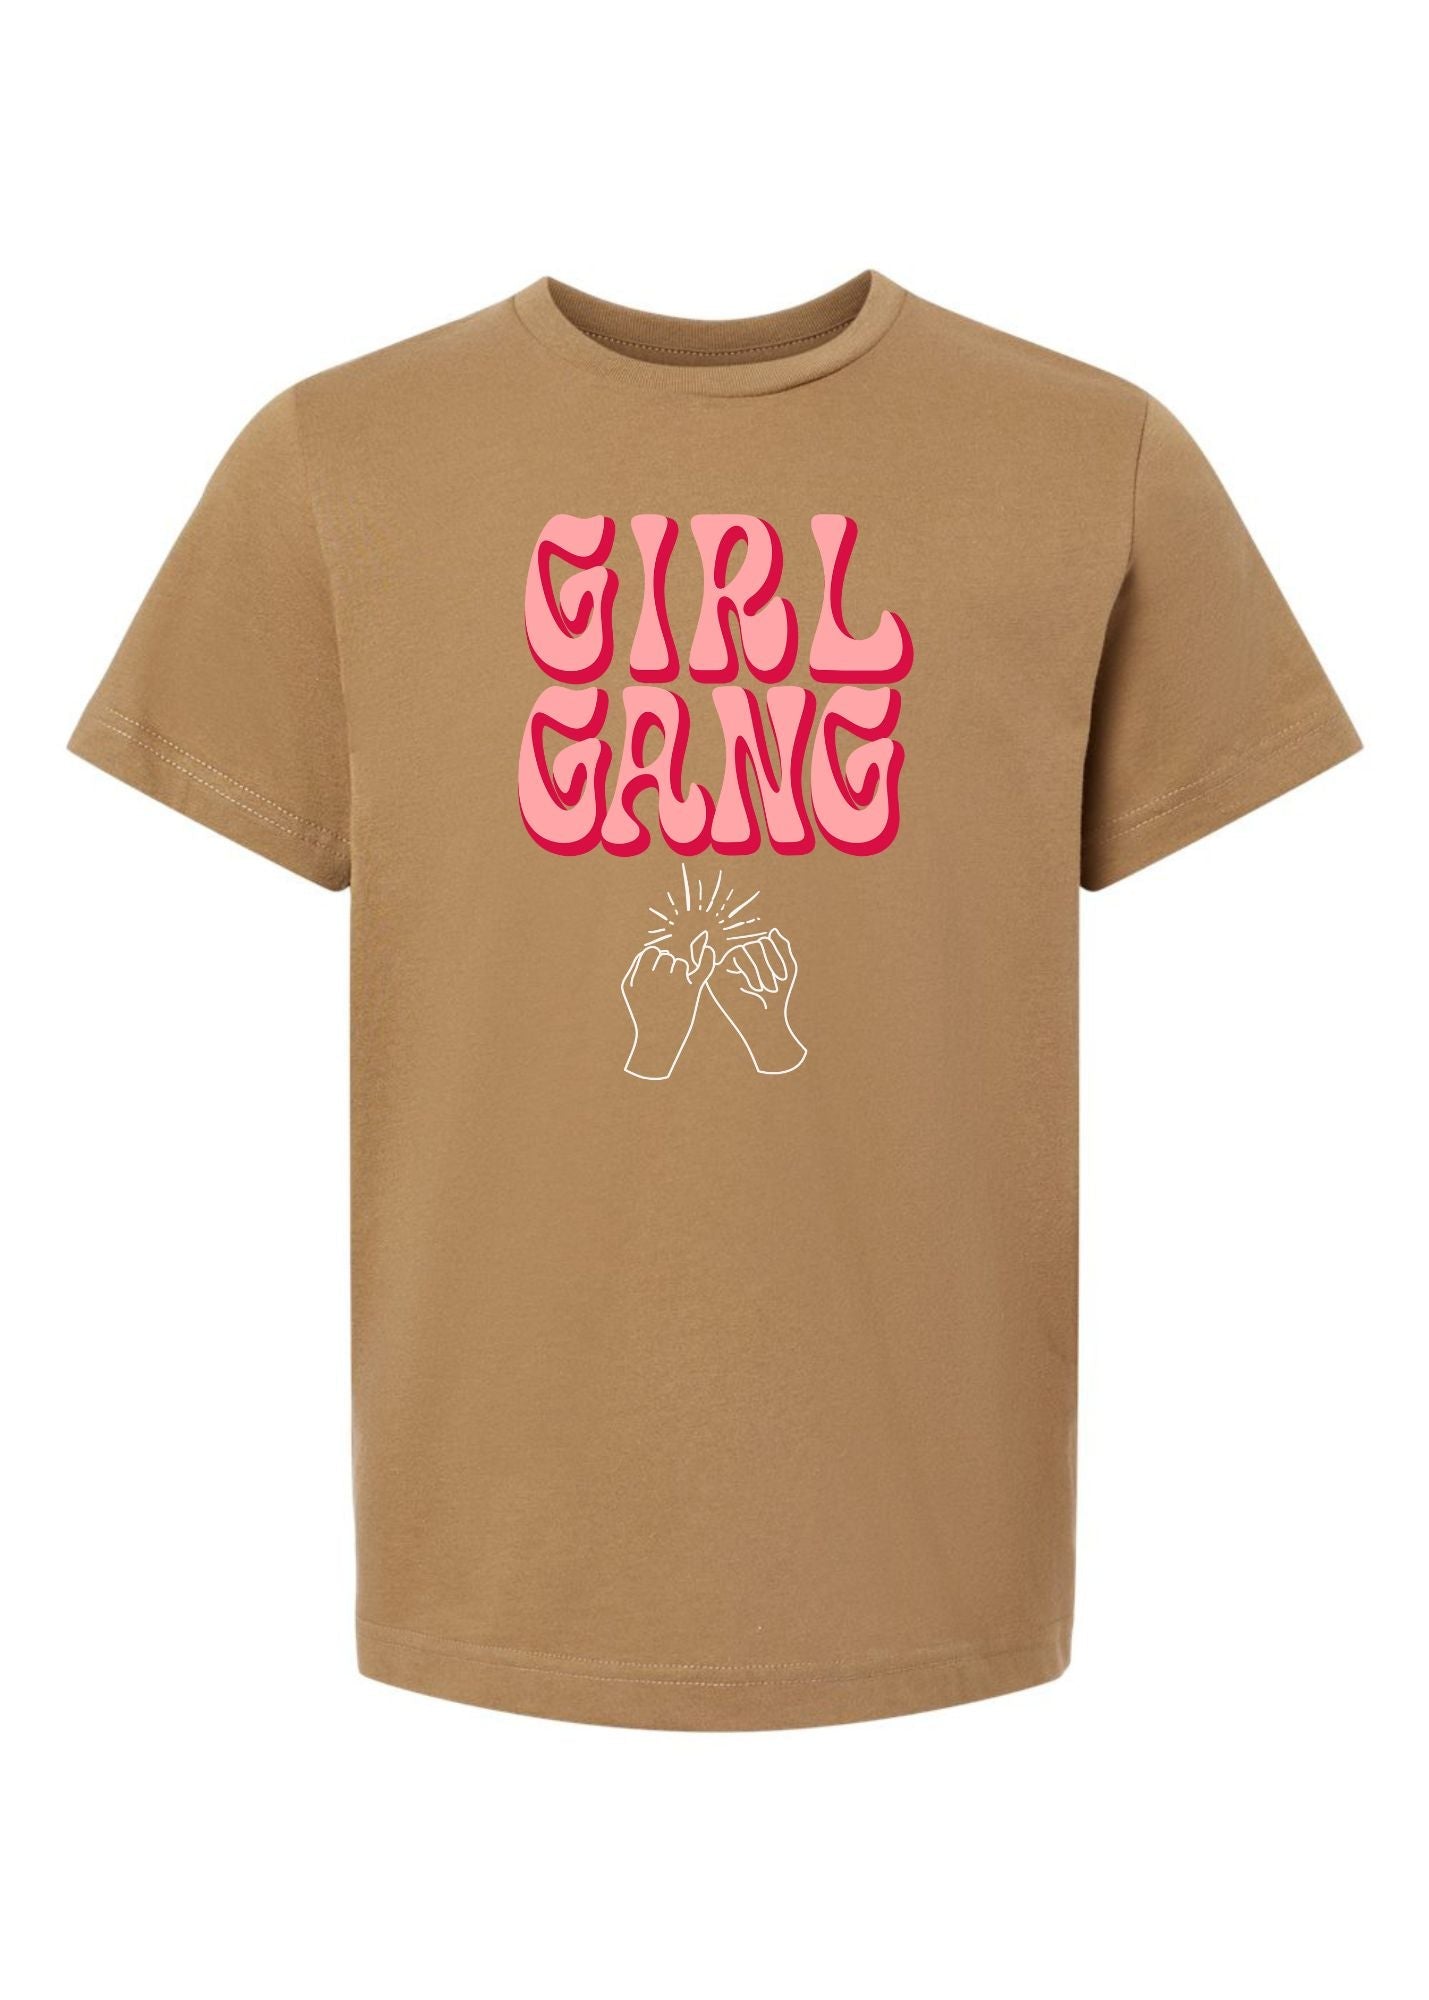 Girl Gang Pinky Swear | Kids Tee | RTS-Sister Shirts-Sister Shirts, Cute & Custom Tees for Mama & Littles in Trussville, Alabama.